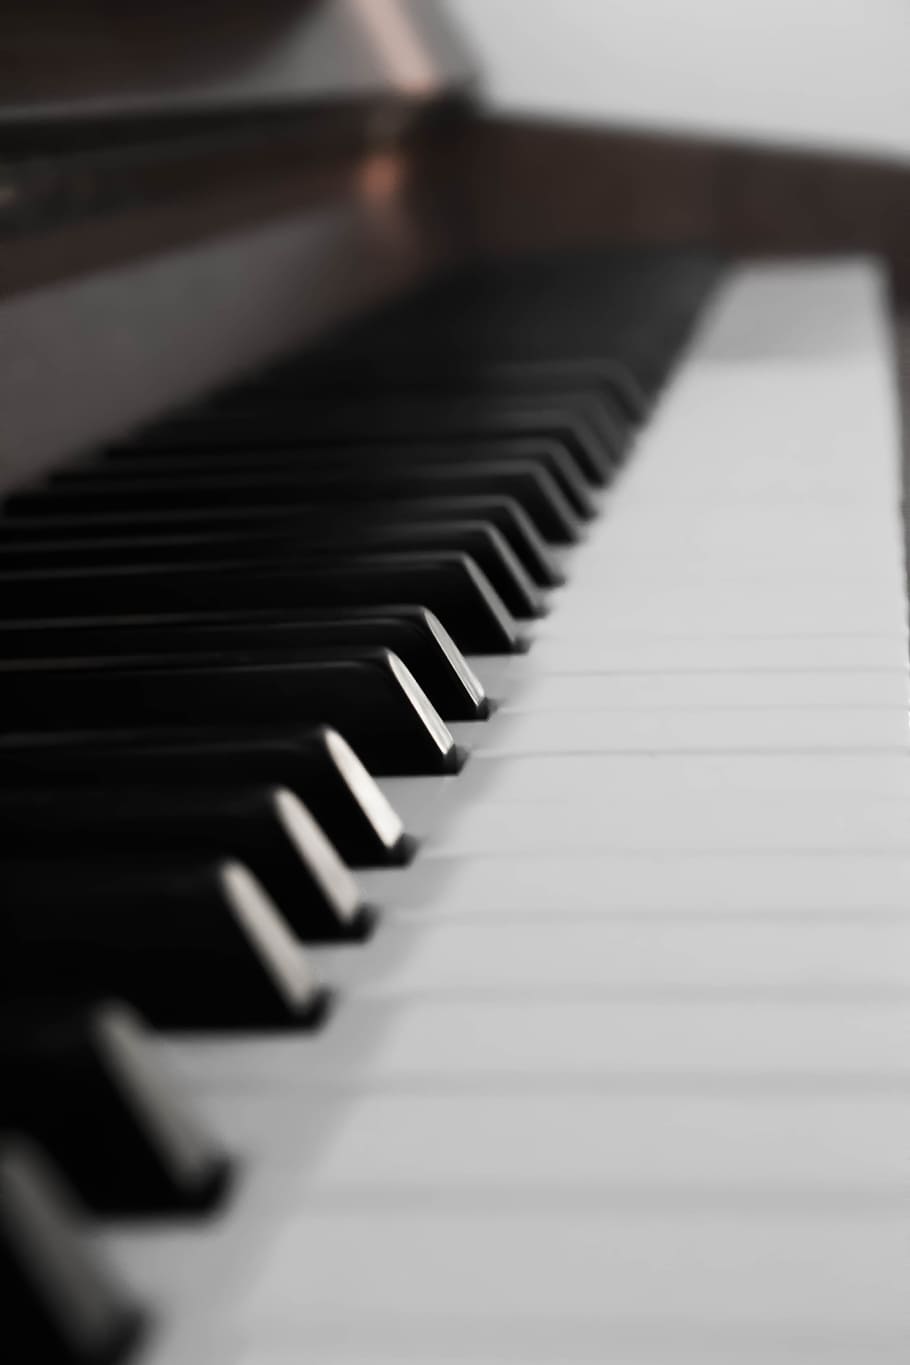 piano, keys, music, piano keyboard, instrument, keyboard instrument, piano keys, musical instrument, musical equipment, piano key